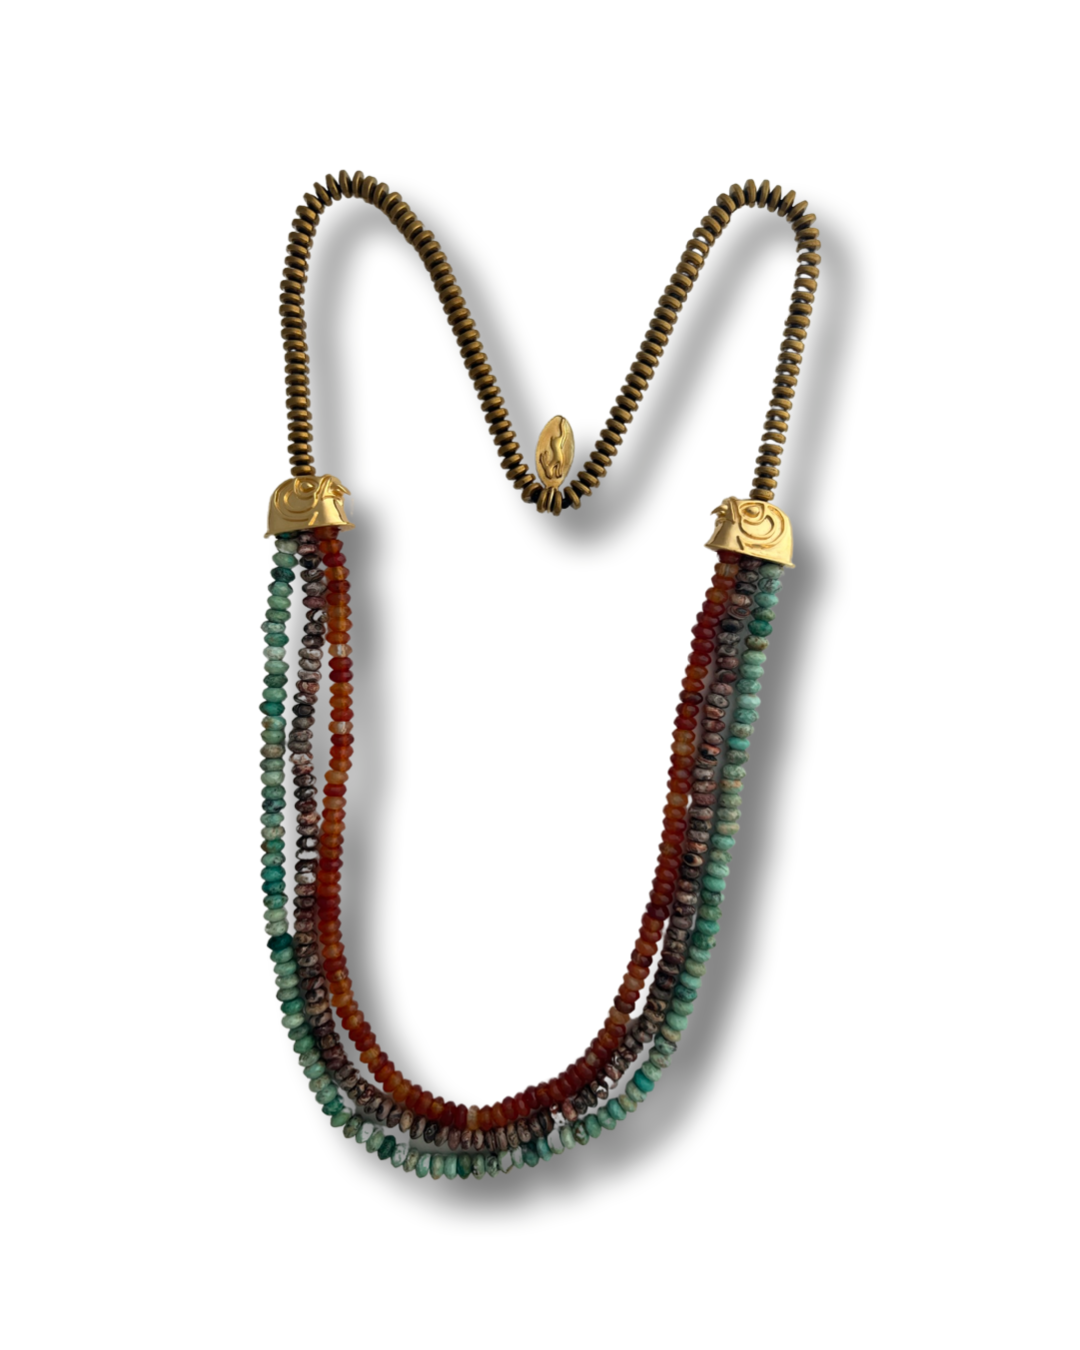 Neferuptah Horus head collar with turquoise, carnelian, jasper and golden hematite,